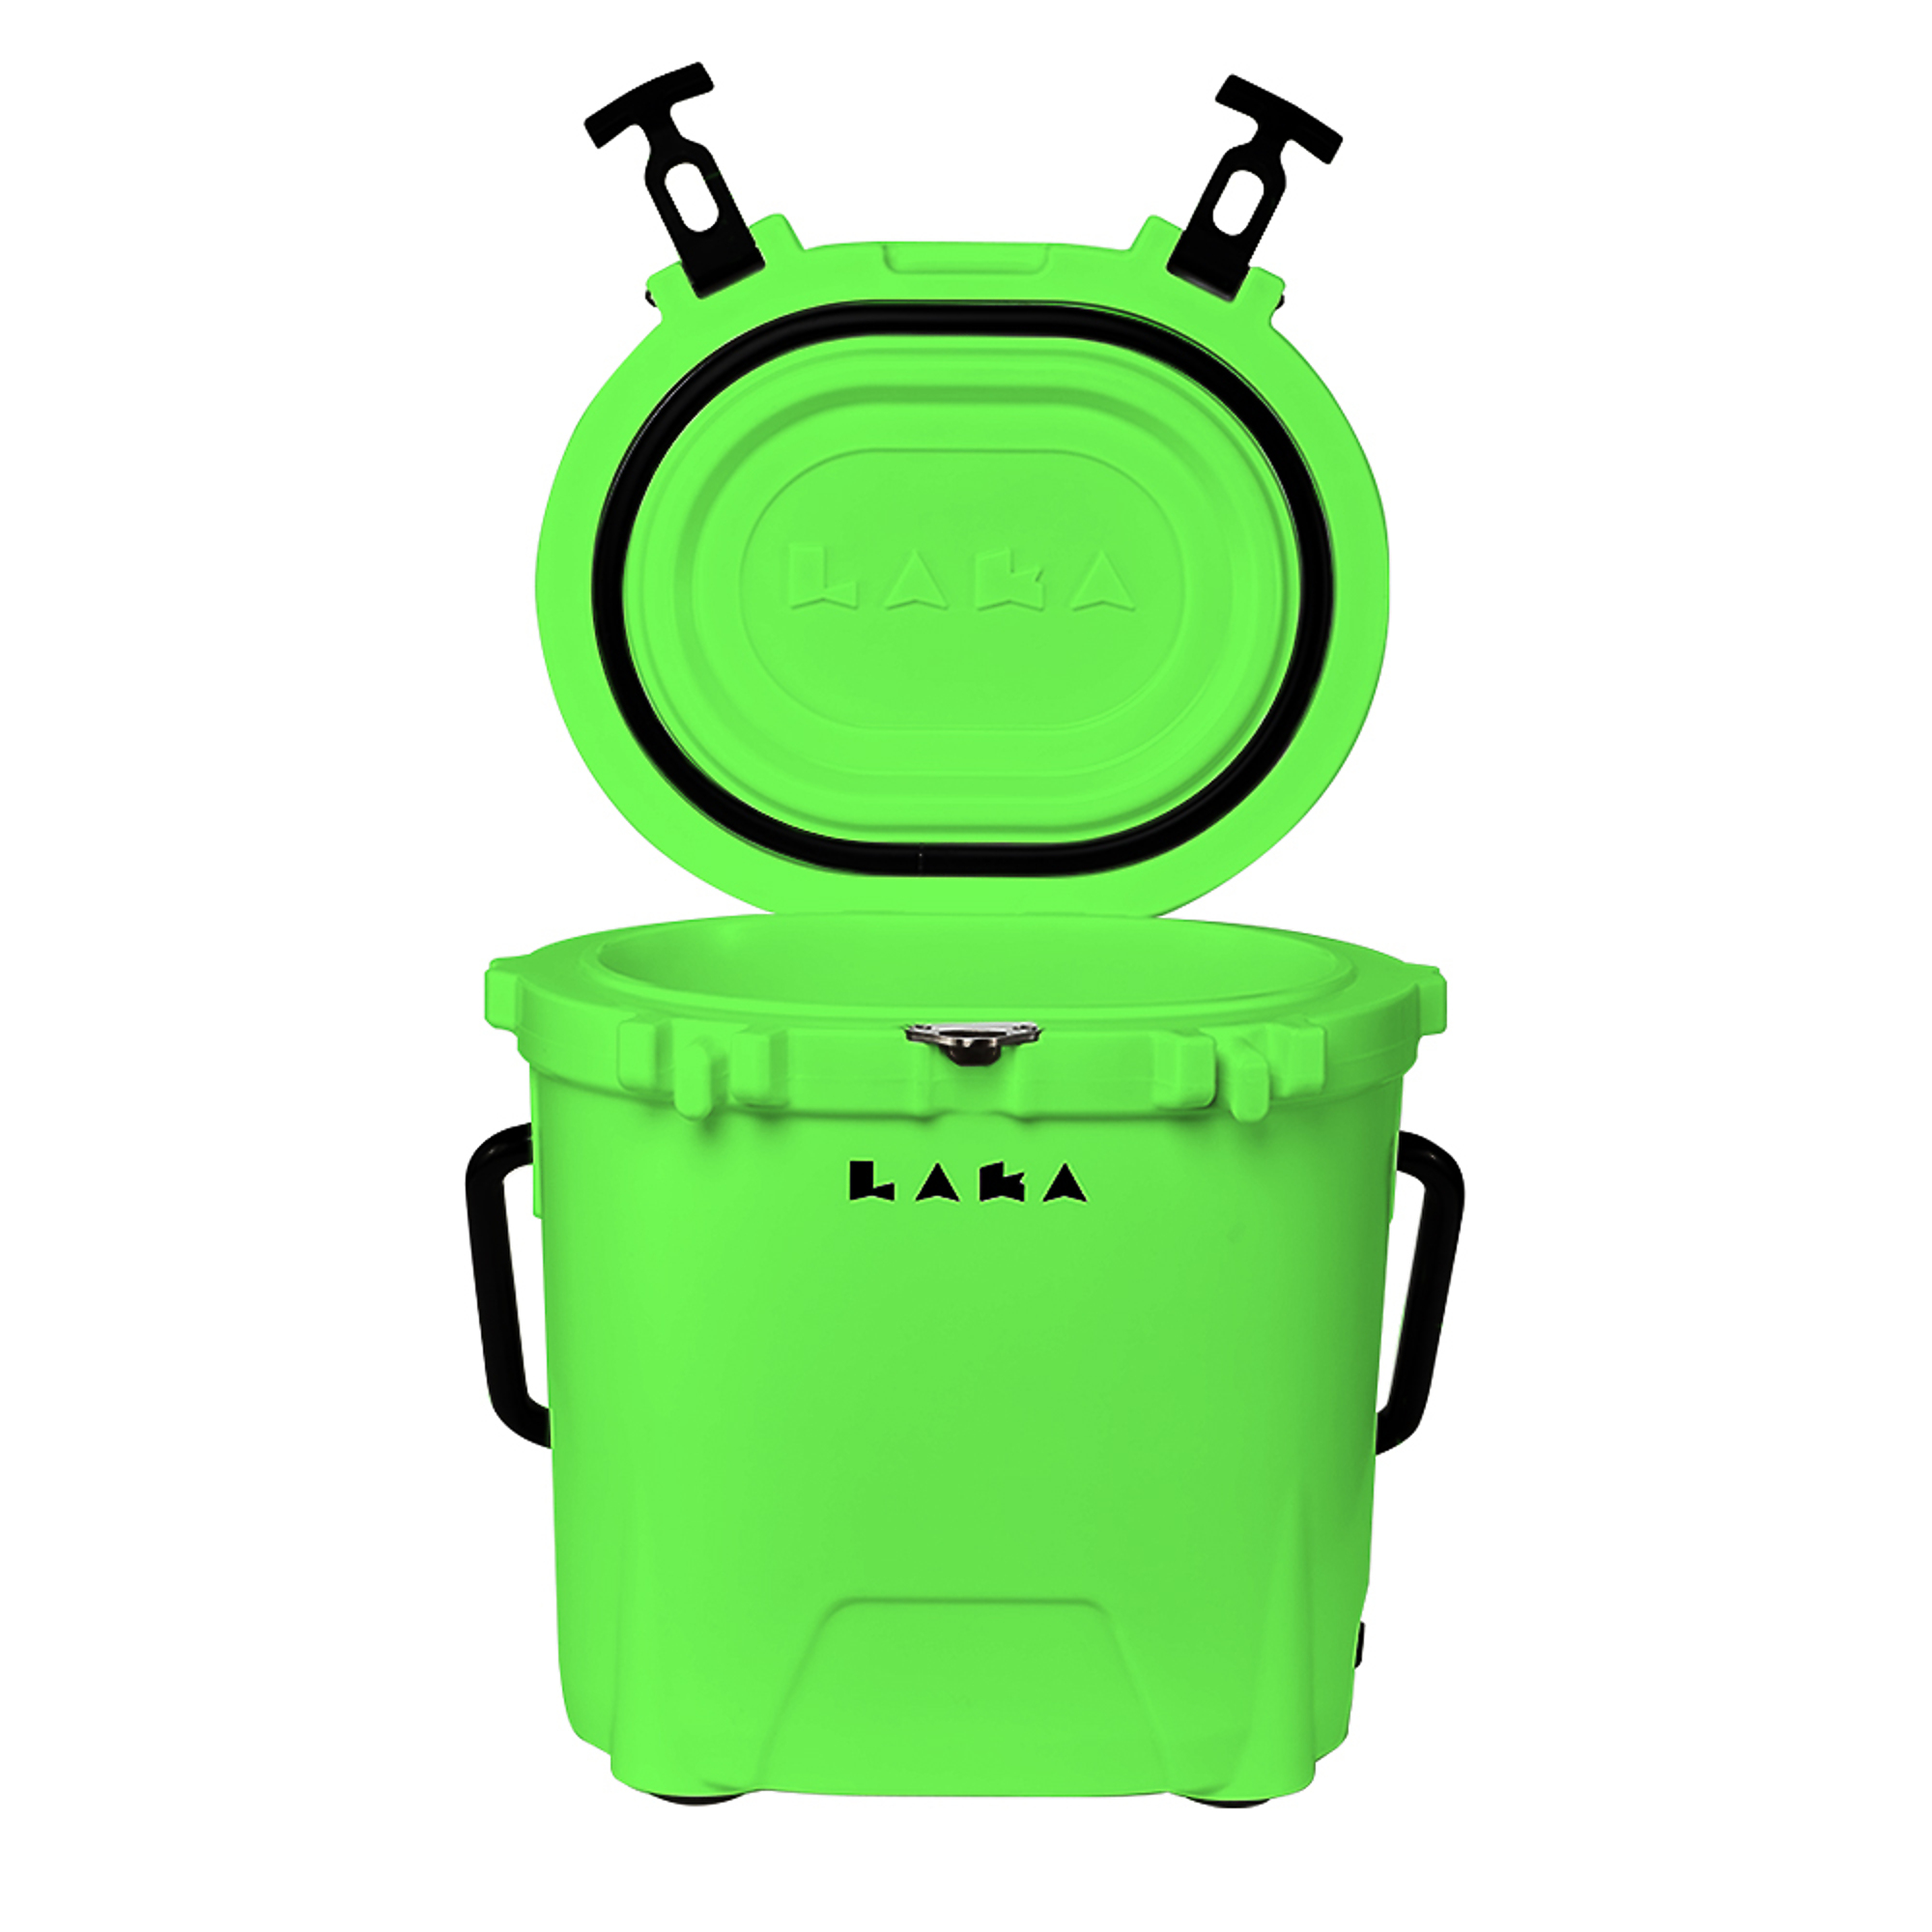 LAKA Cooler, 20 Quart Cooler - Lime Green, Capacity 5 Gal, Model 1055